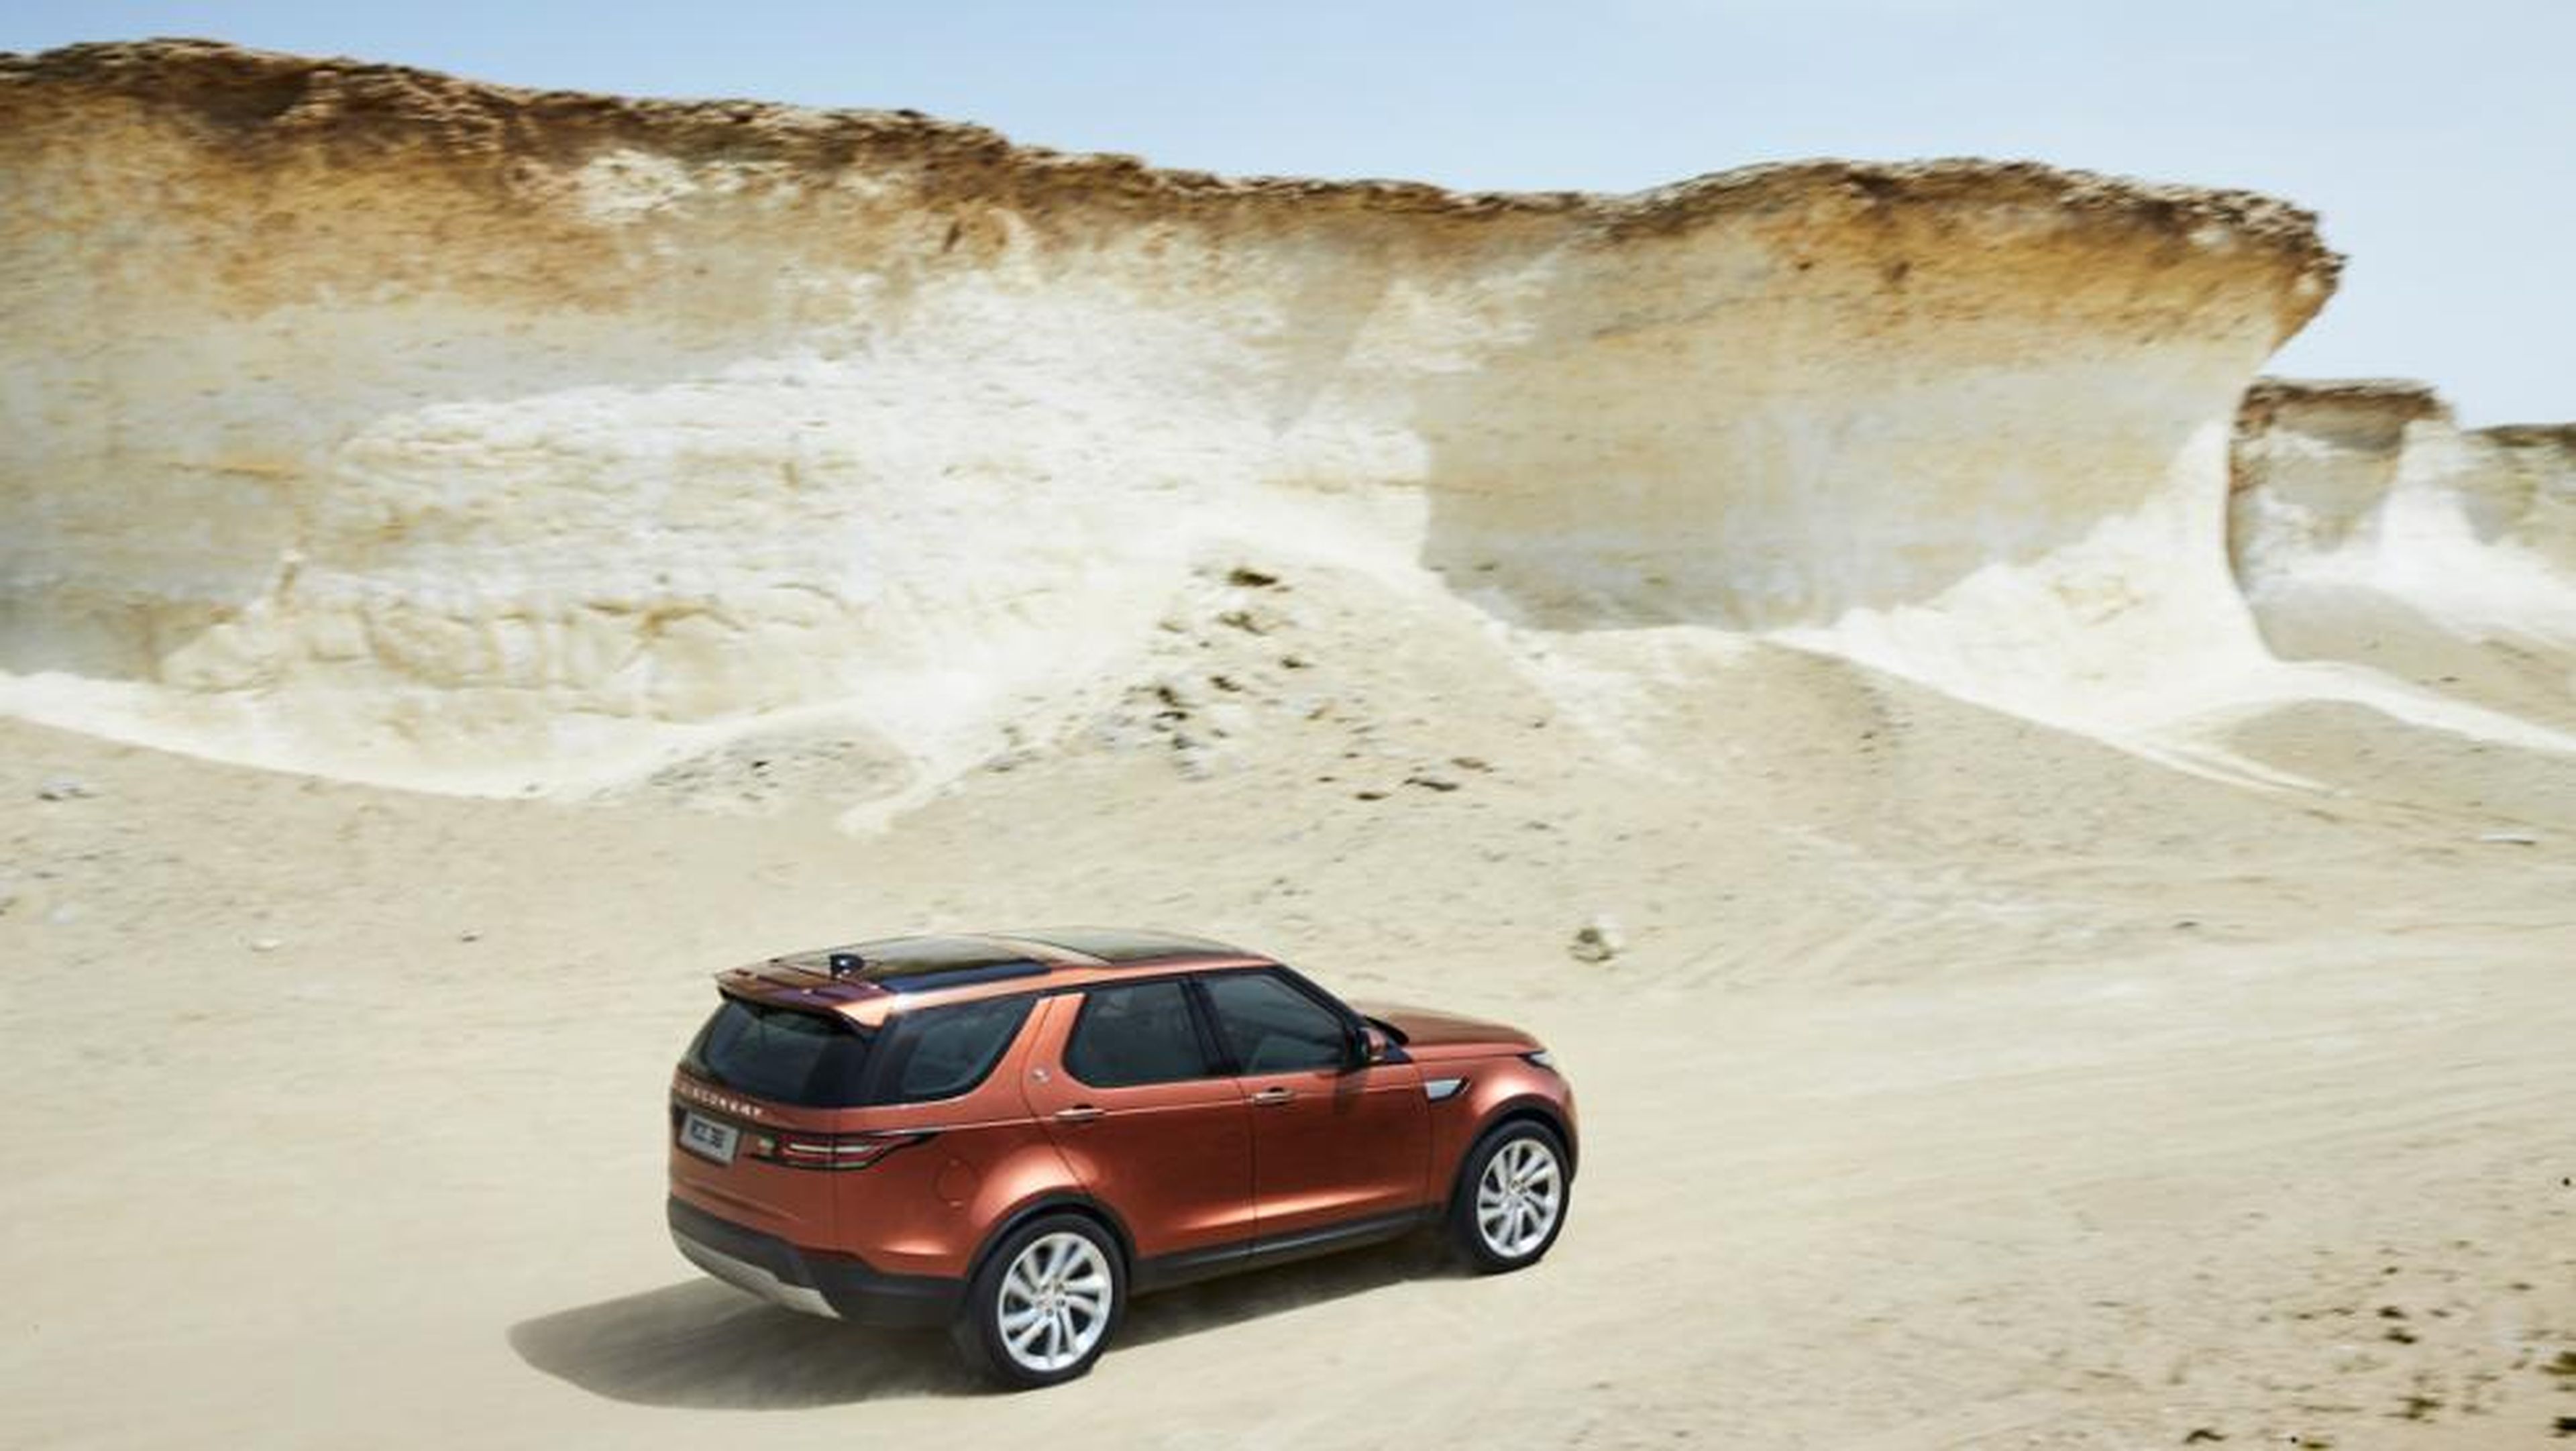 SUV 2017: Land Rover Discovery (I)